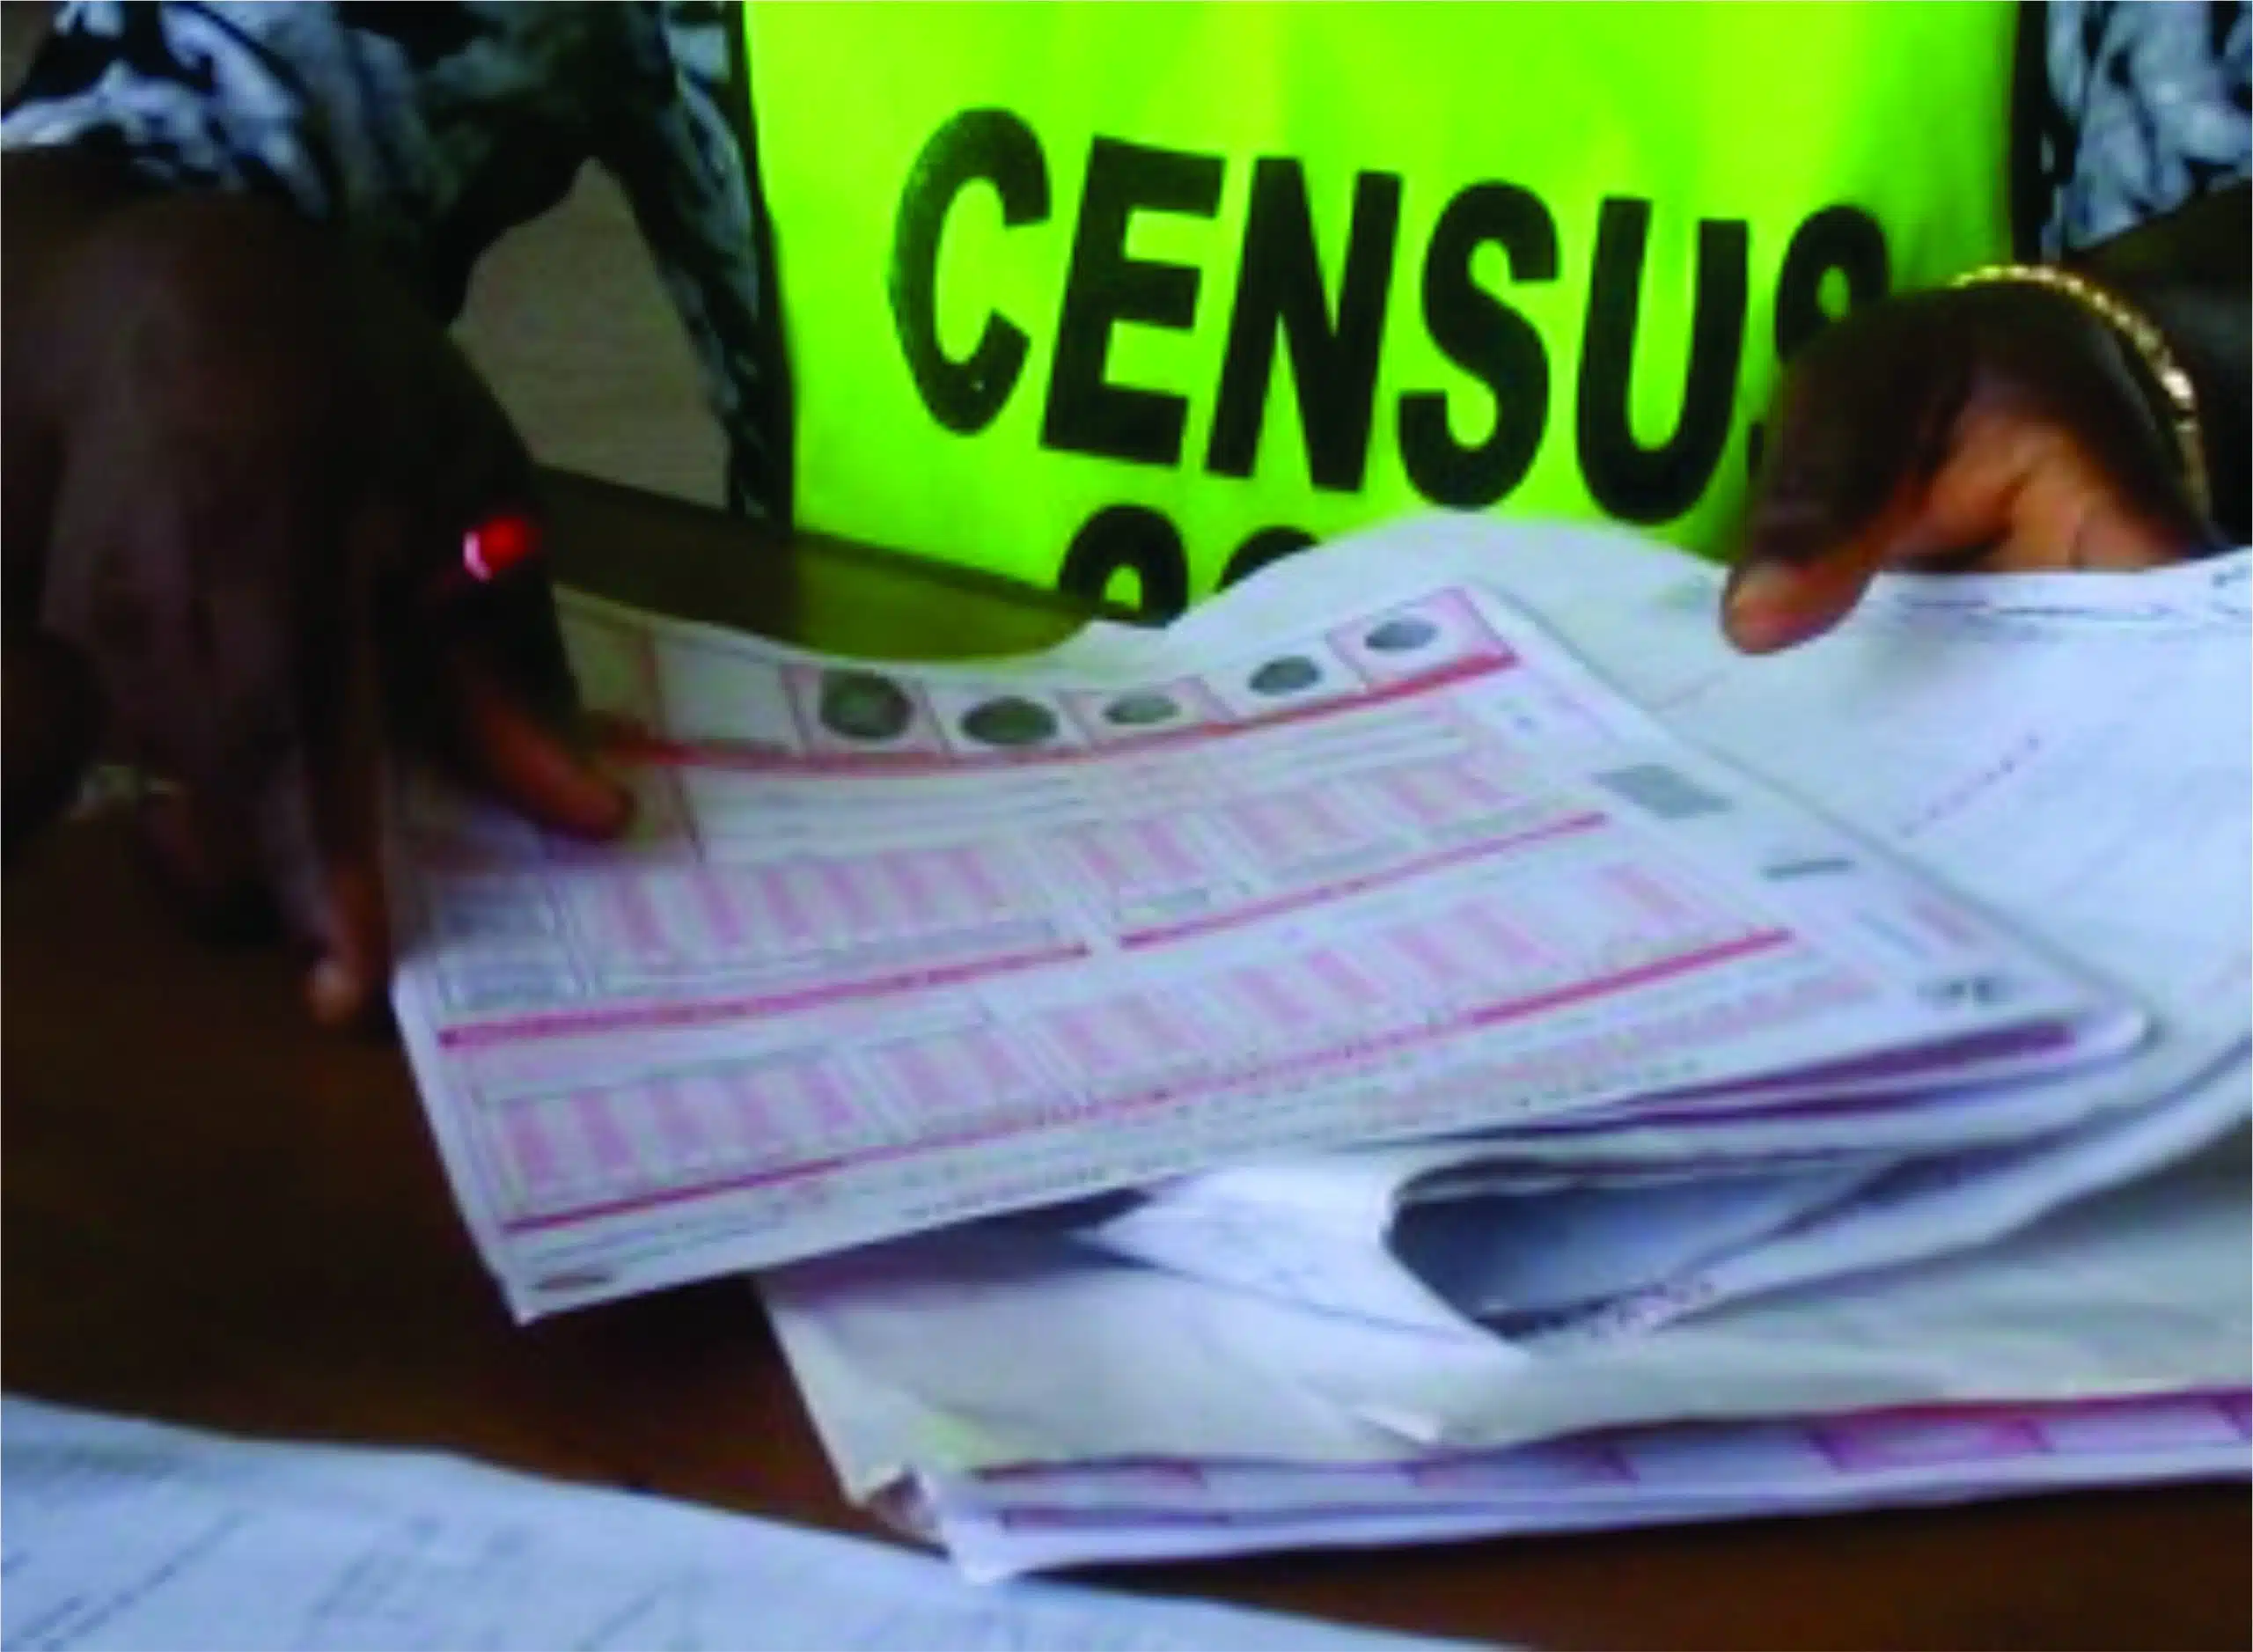 N200bn Has Been Spent For 2023 Census Preparation - NPC